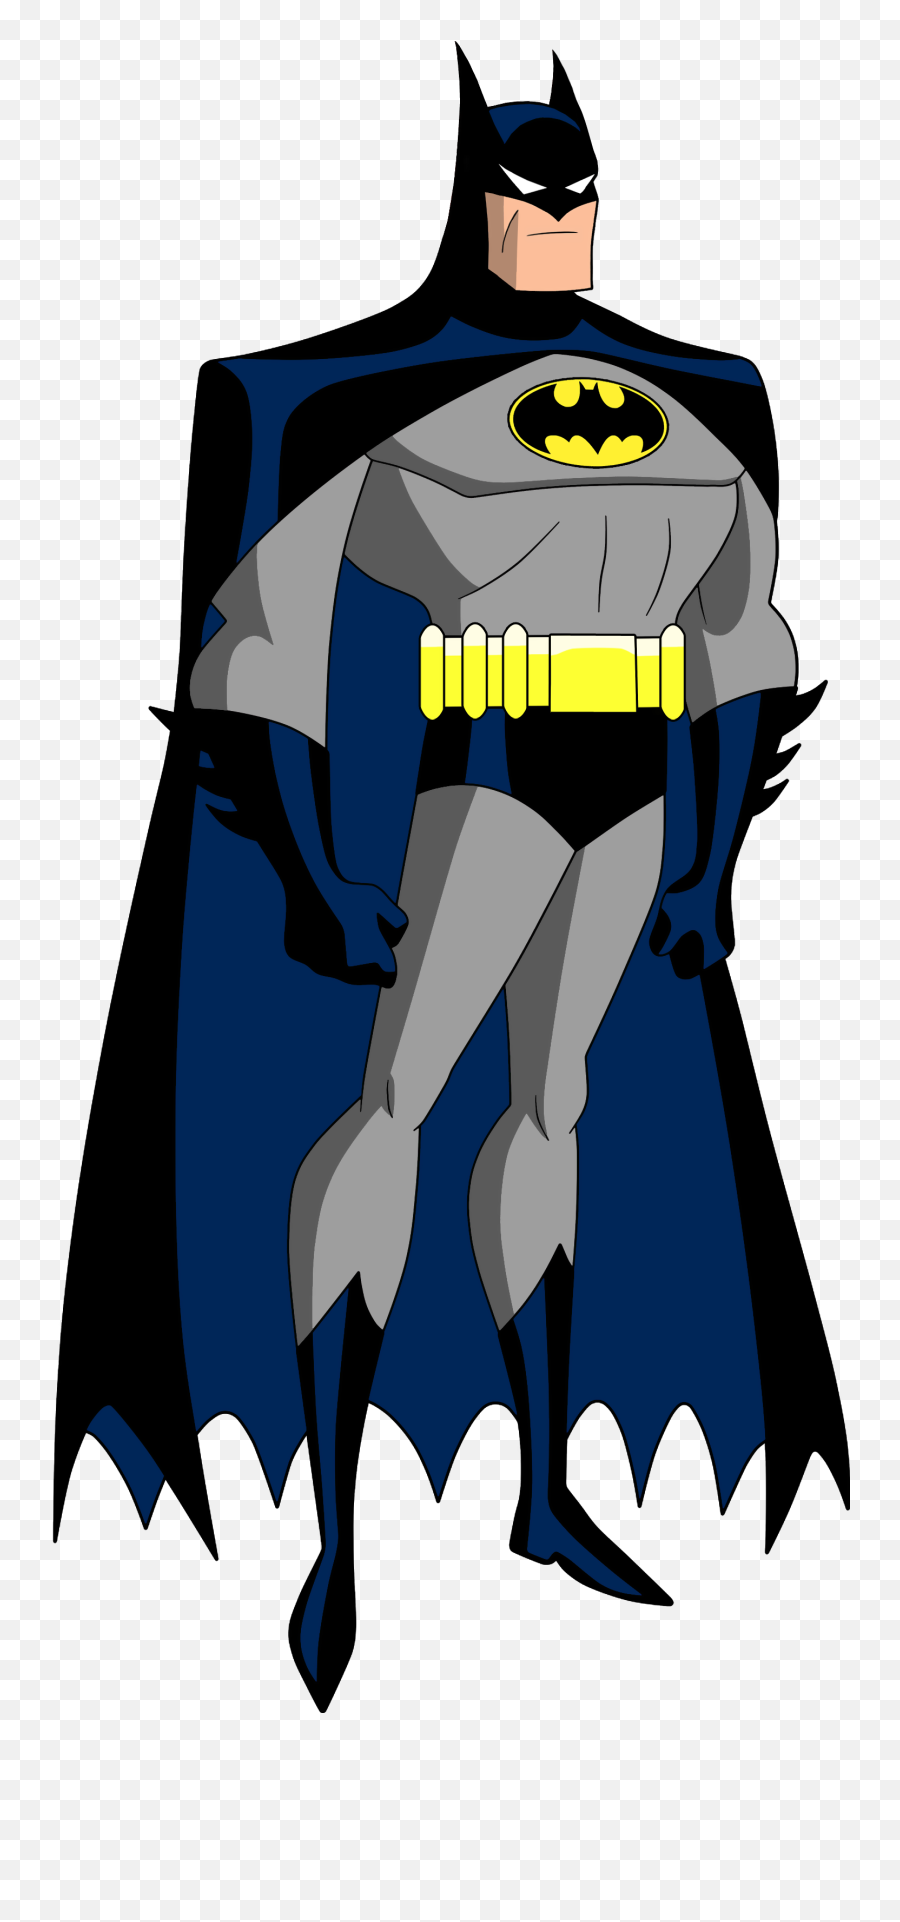 Justice League Animated Series Batman - Batman Justice League Animated Png,Bat Signal Png